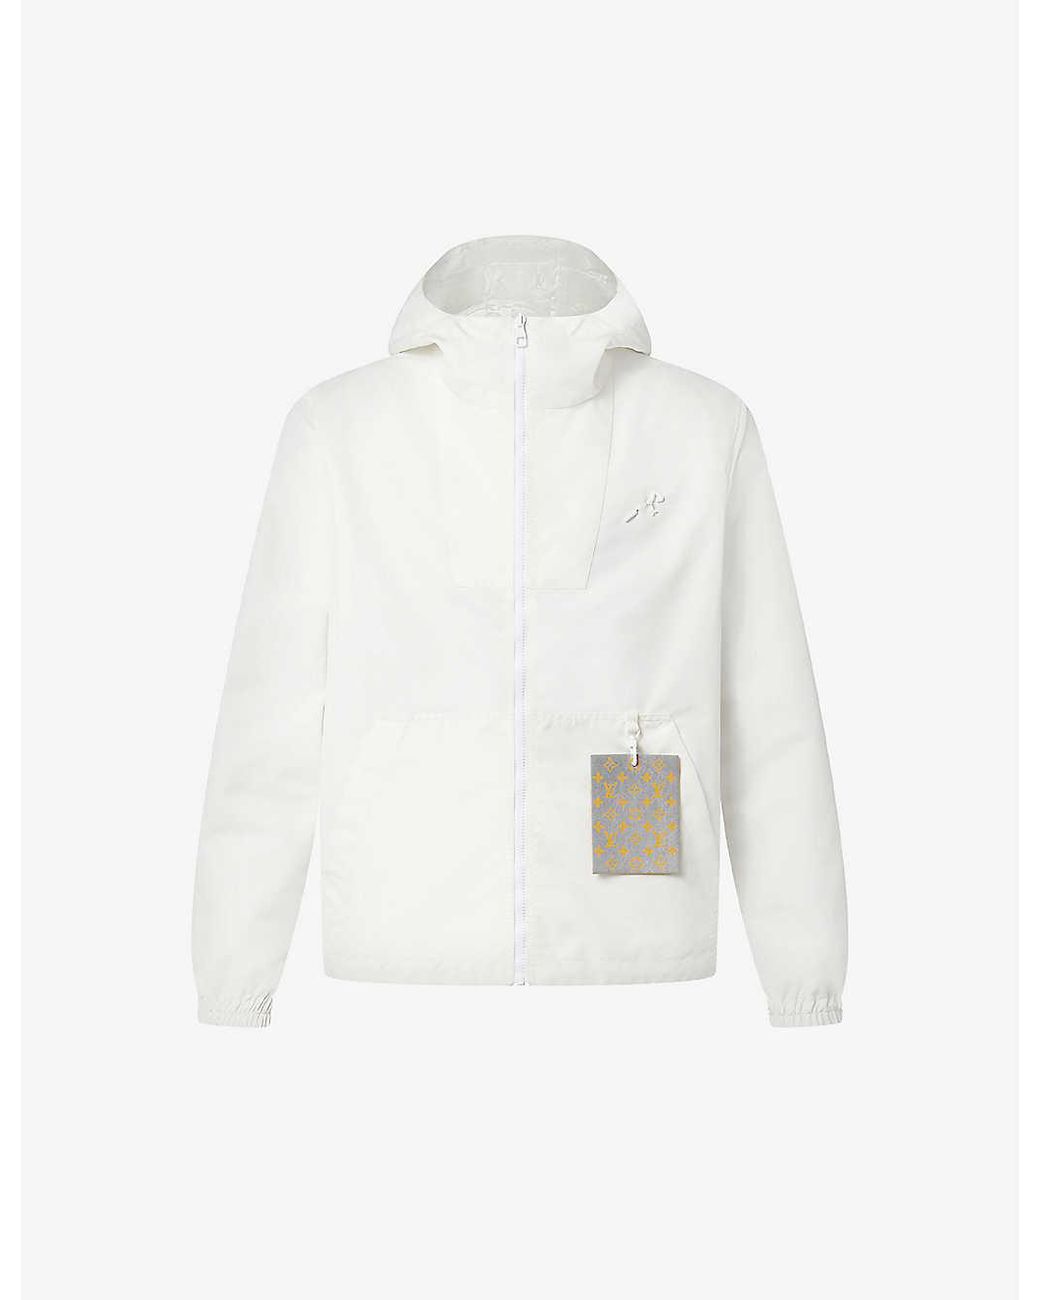 Louis Vuitton White & Black Monogram Hooded Jacket